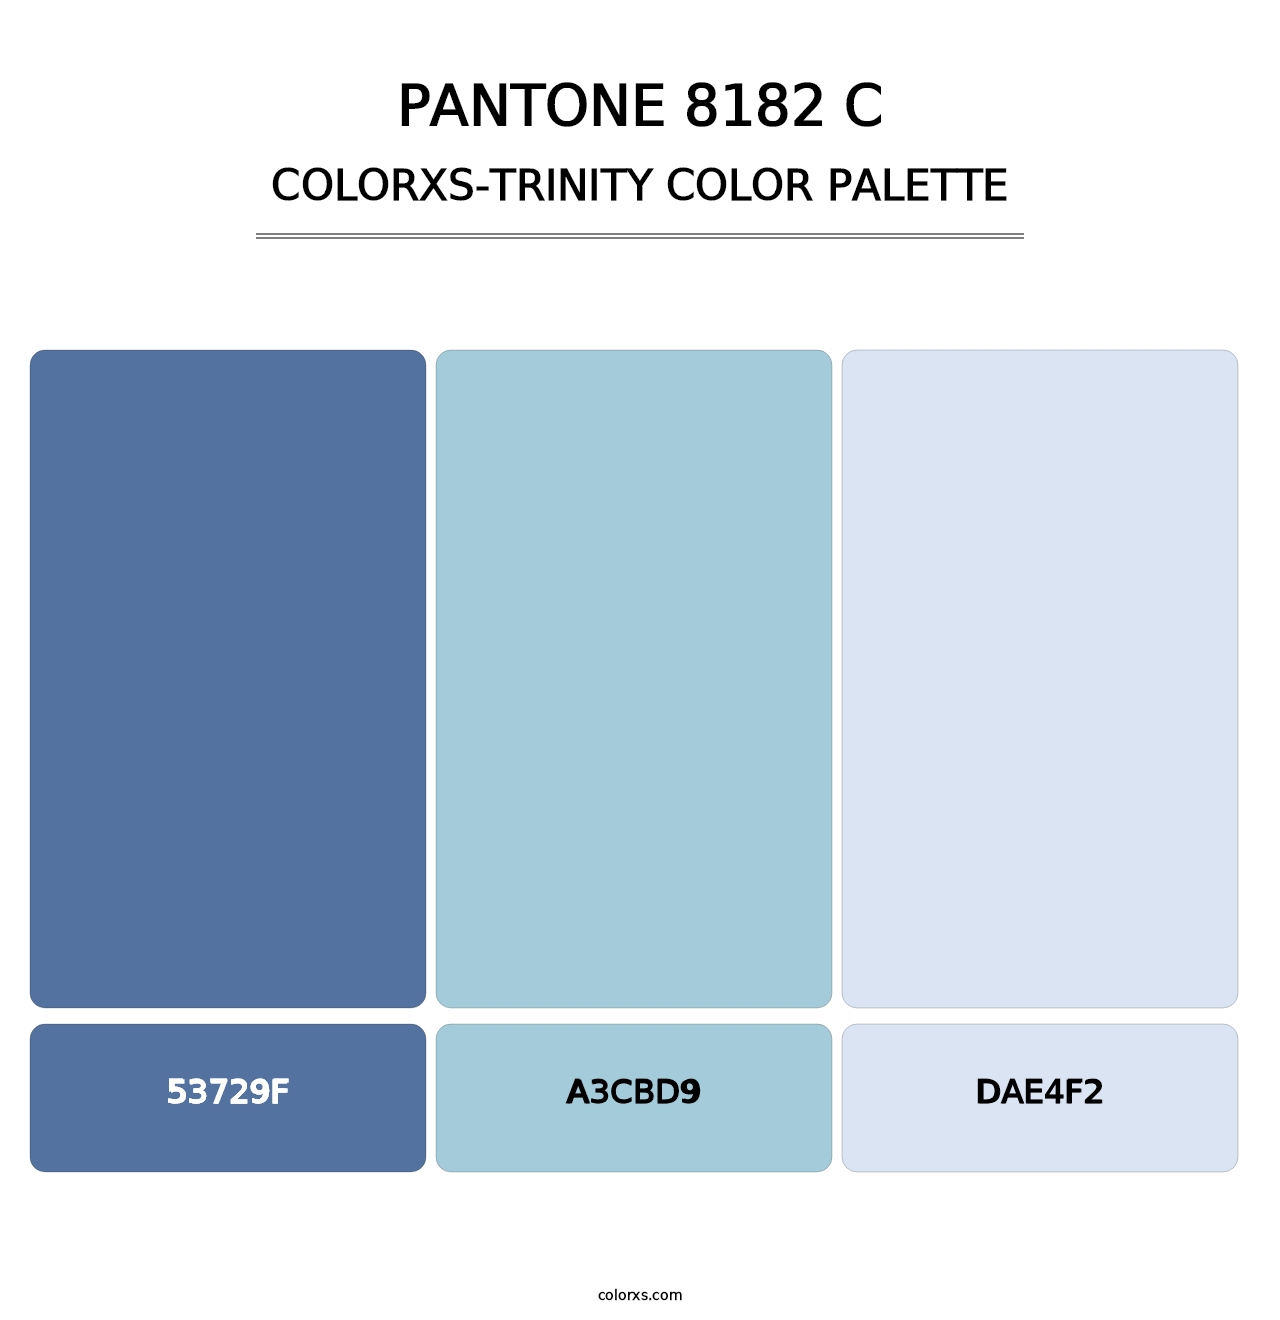 PANTONE 8182 C - Colorxs Trinity Palette